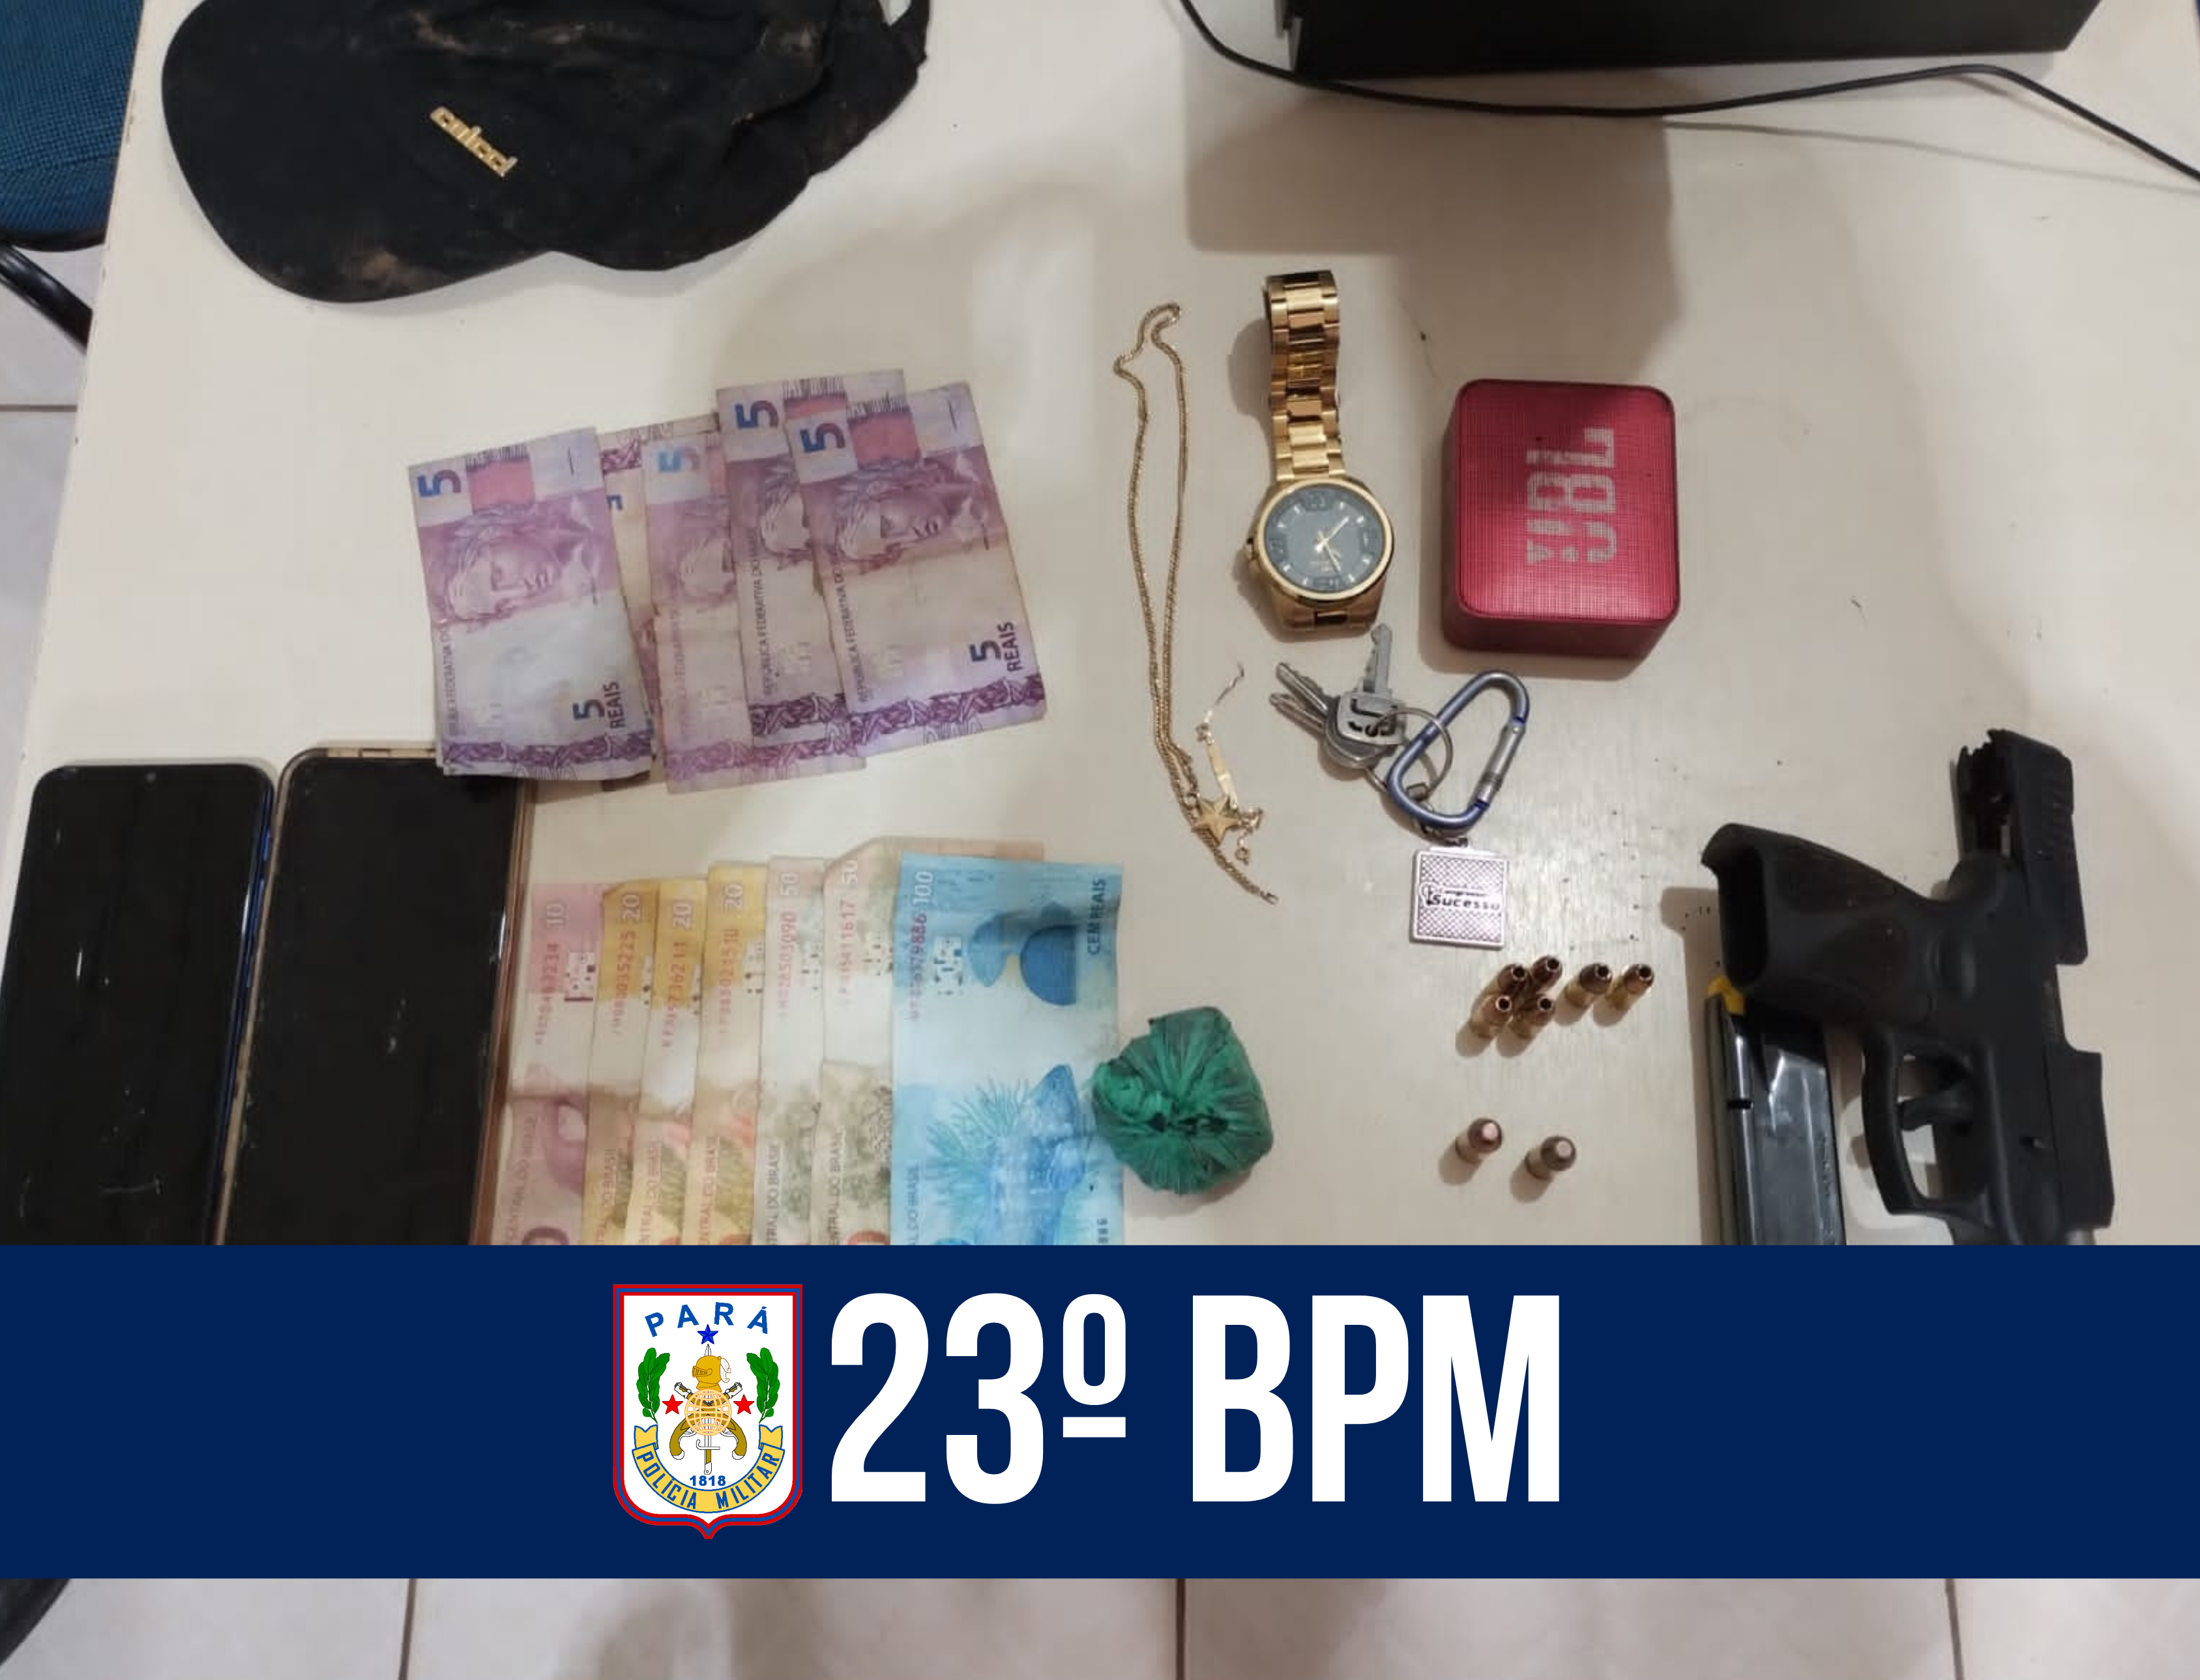 23º BPM frustra roubo no município de Curionópolis